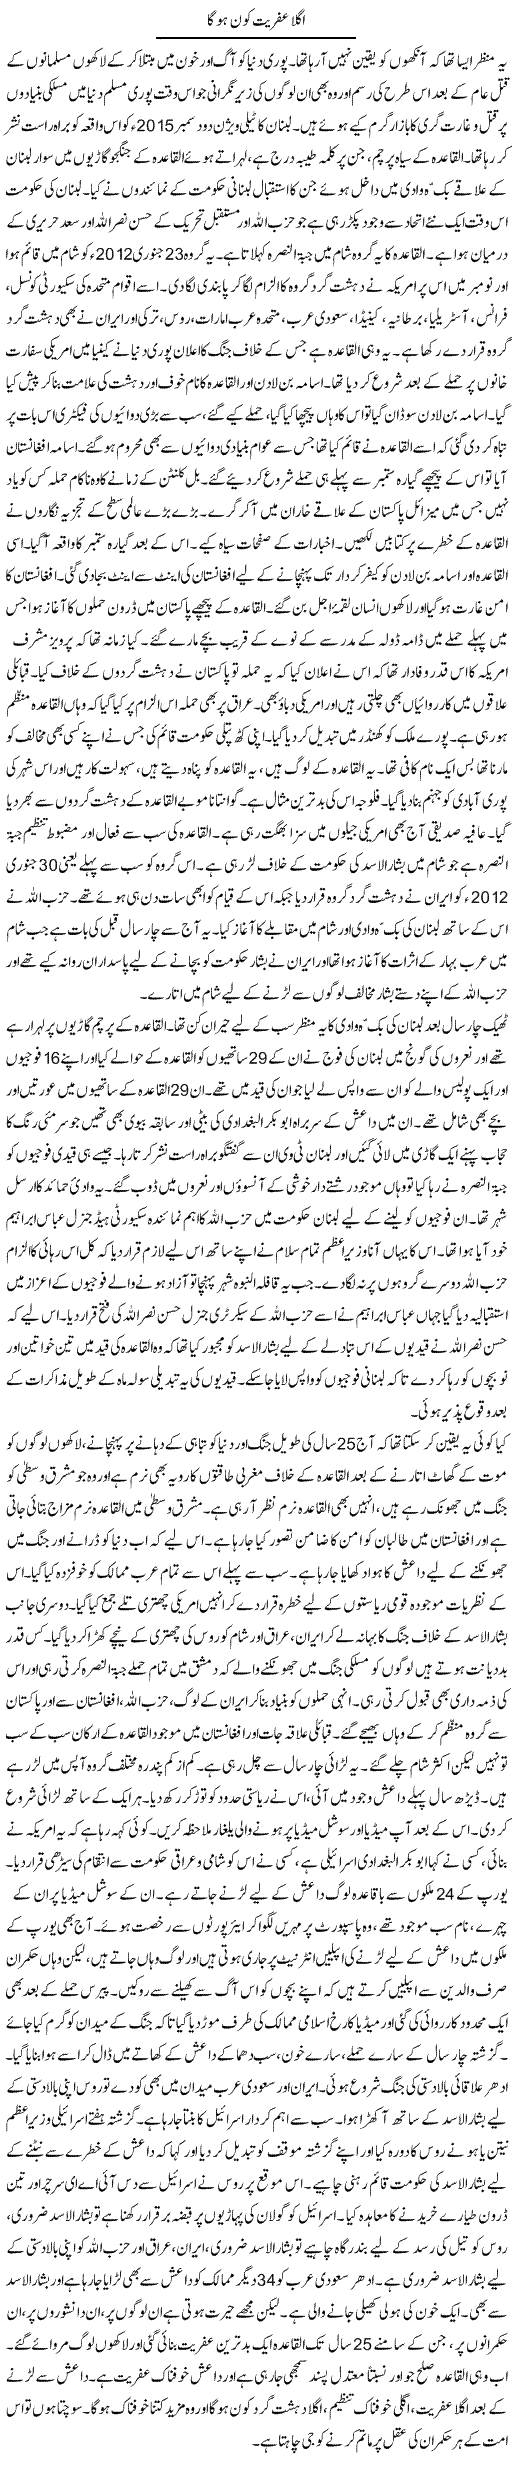 Agla Afreet Kon Ho Ga | Orya Maqbool Jan | Daily Urdu Columns